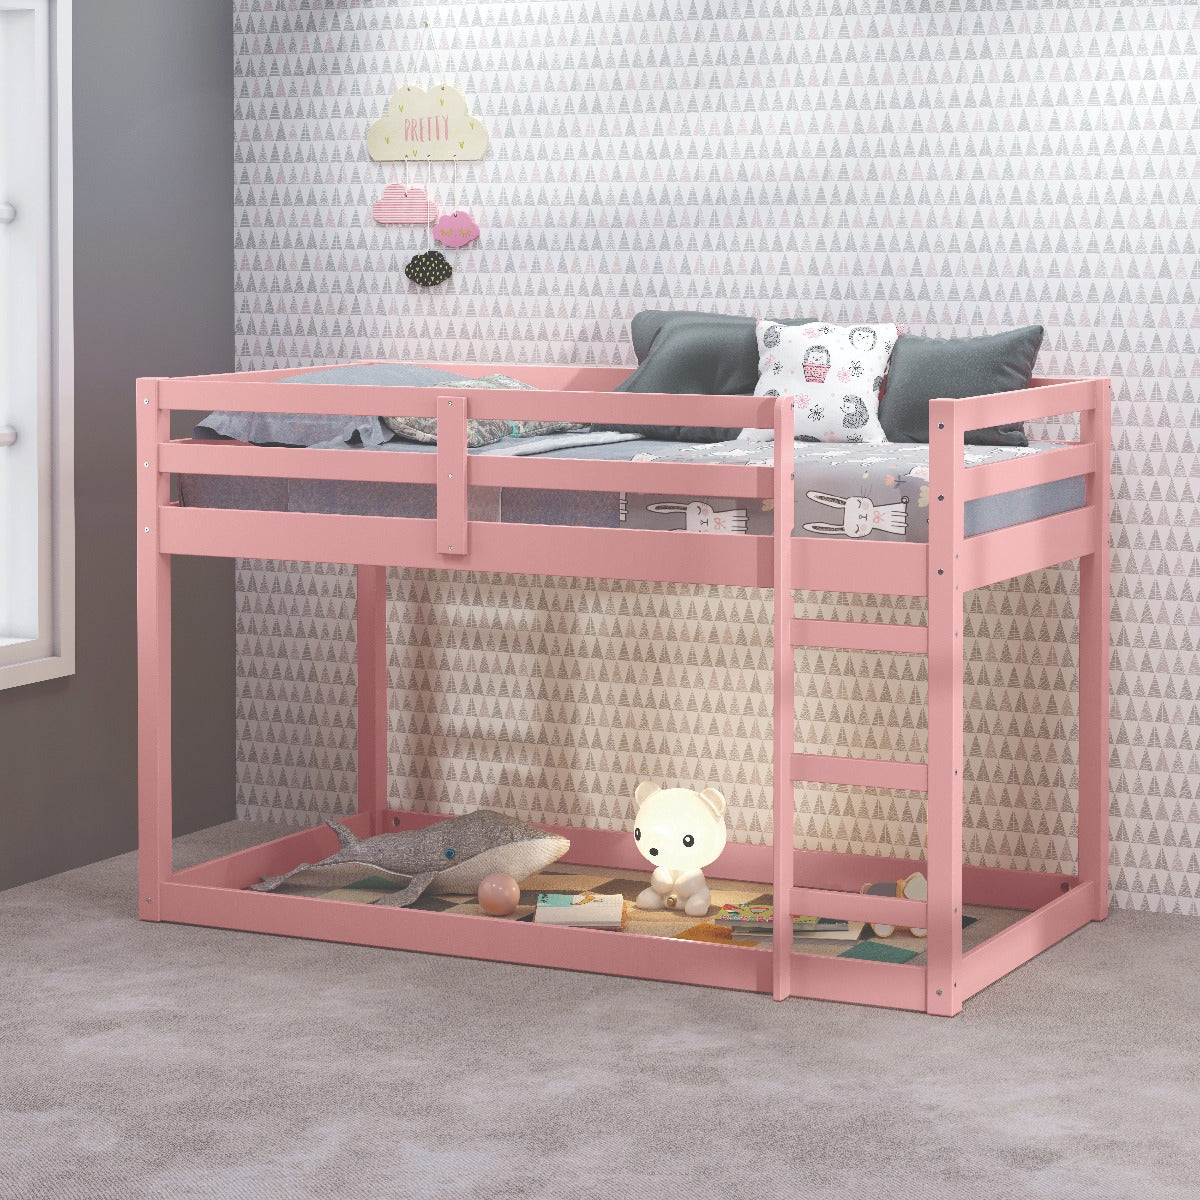 ACME Beds - ACME Gaston II Twin Loft Bed, Pink Finish